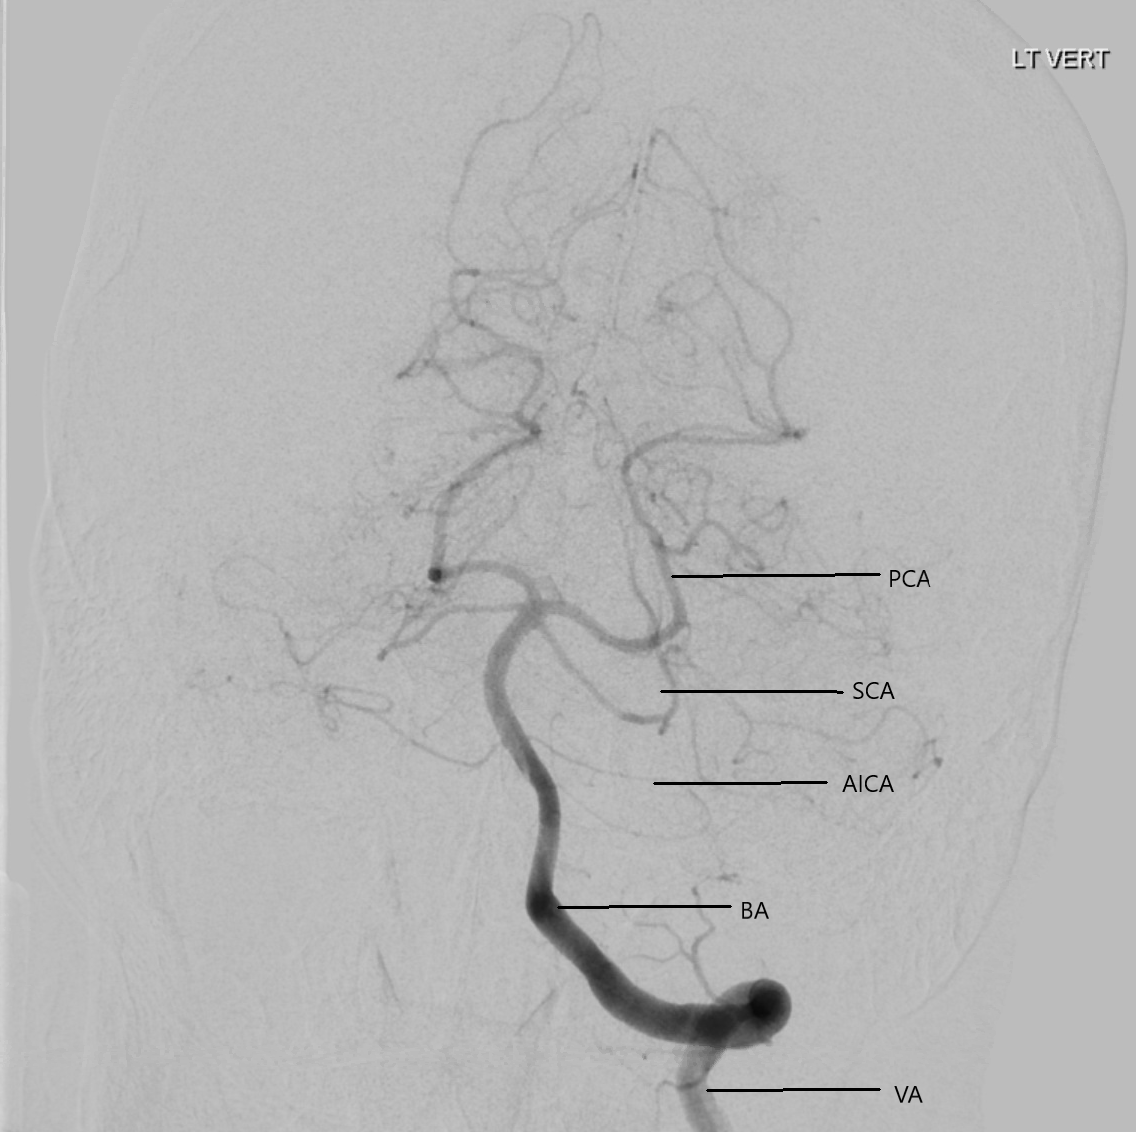 Digital Subtraction Angiogram of the left vertebral artery. PCA - posterior cerebral artery, SCA - superior cerebellar artery, AICA - anterior inferior cerebellar artery, BA - basilar artery, VA - vertebral artery